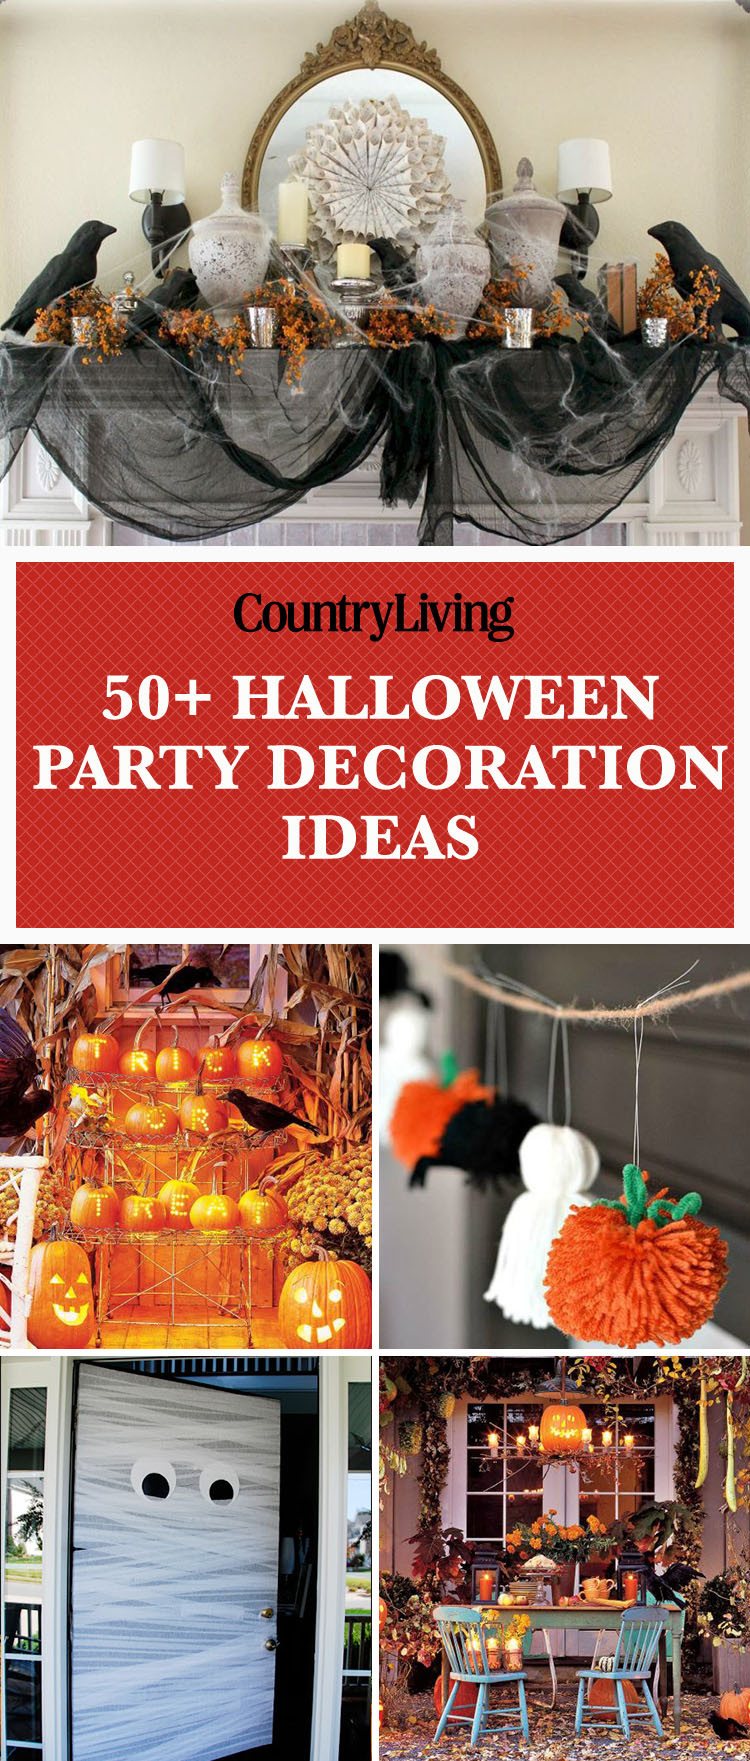 Halloween Decorating Party Ideas
 56 Fun Halloween Party Decorating Ideas Spooky Halloween